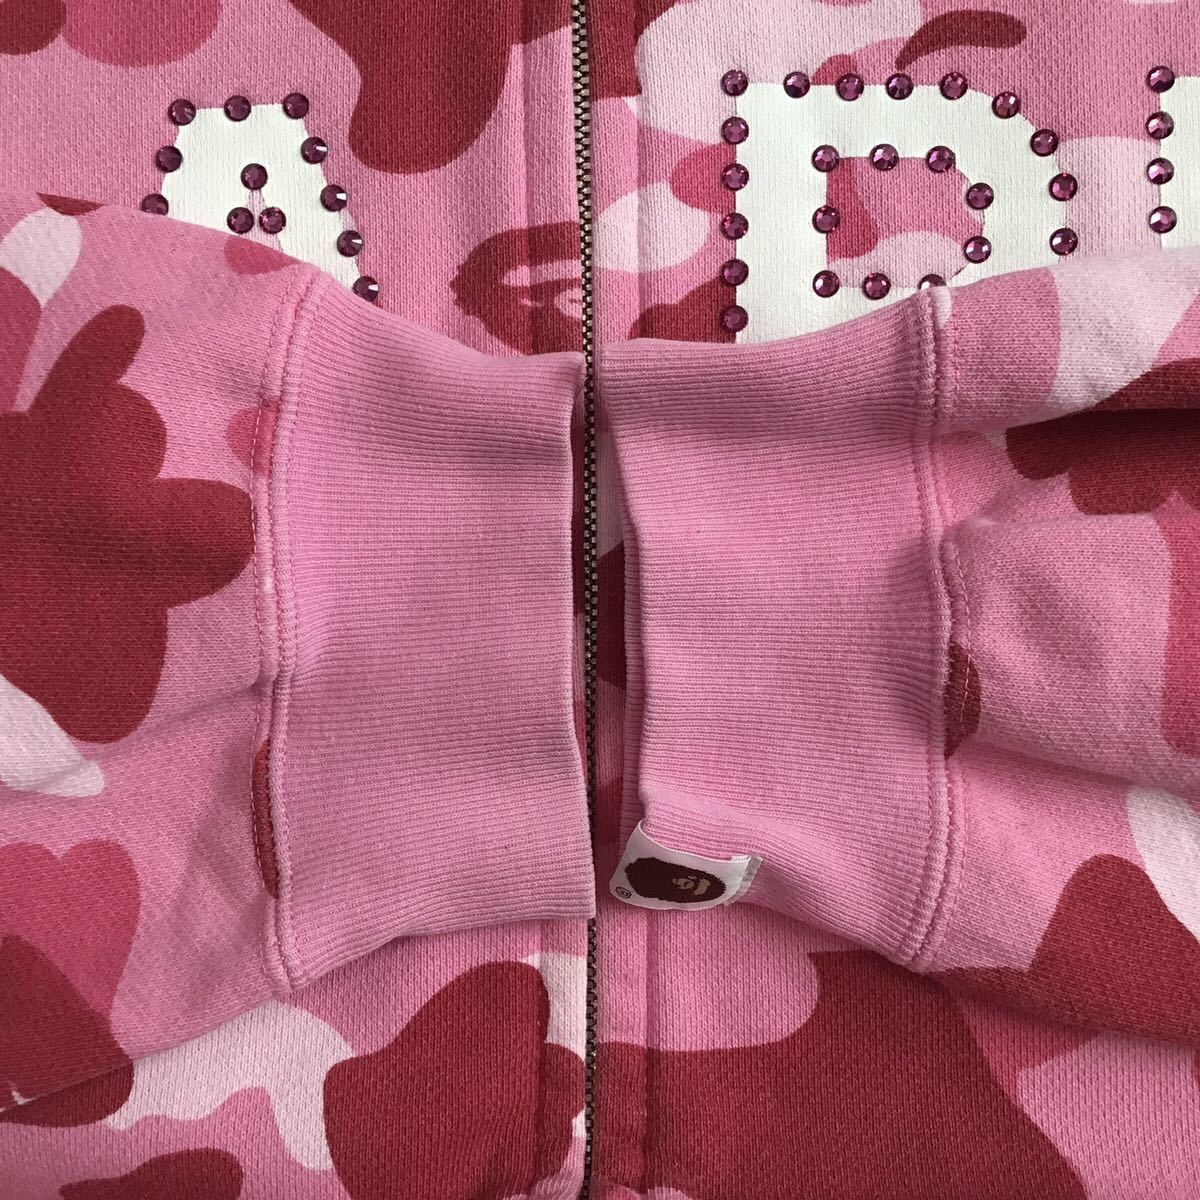 Bape Pink Swarovski BAPE LOGO full zip hoodie Pink camo APE NIGO Size US L / EU 52-54 / 3 - 7 Thumbnail